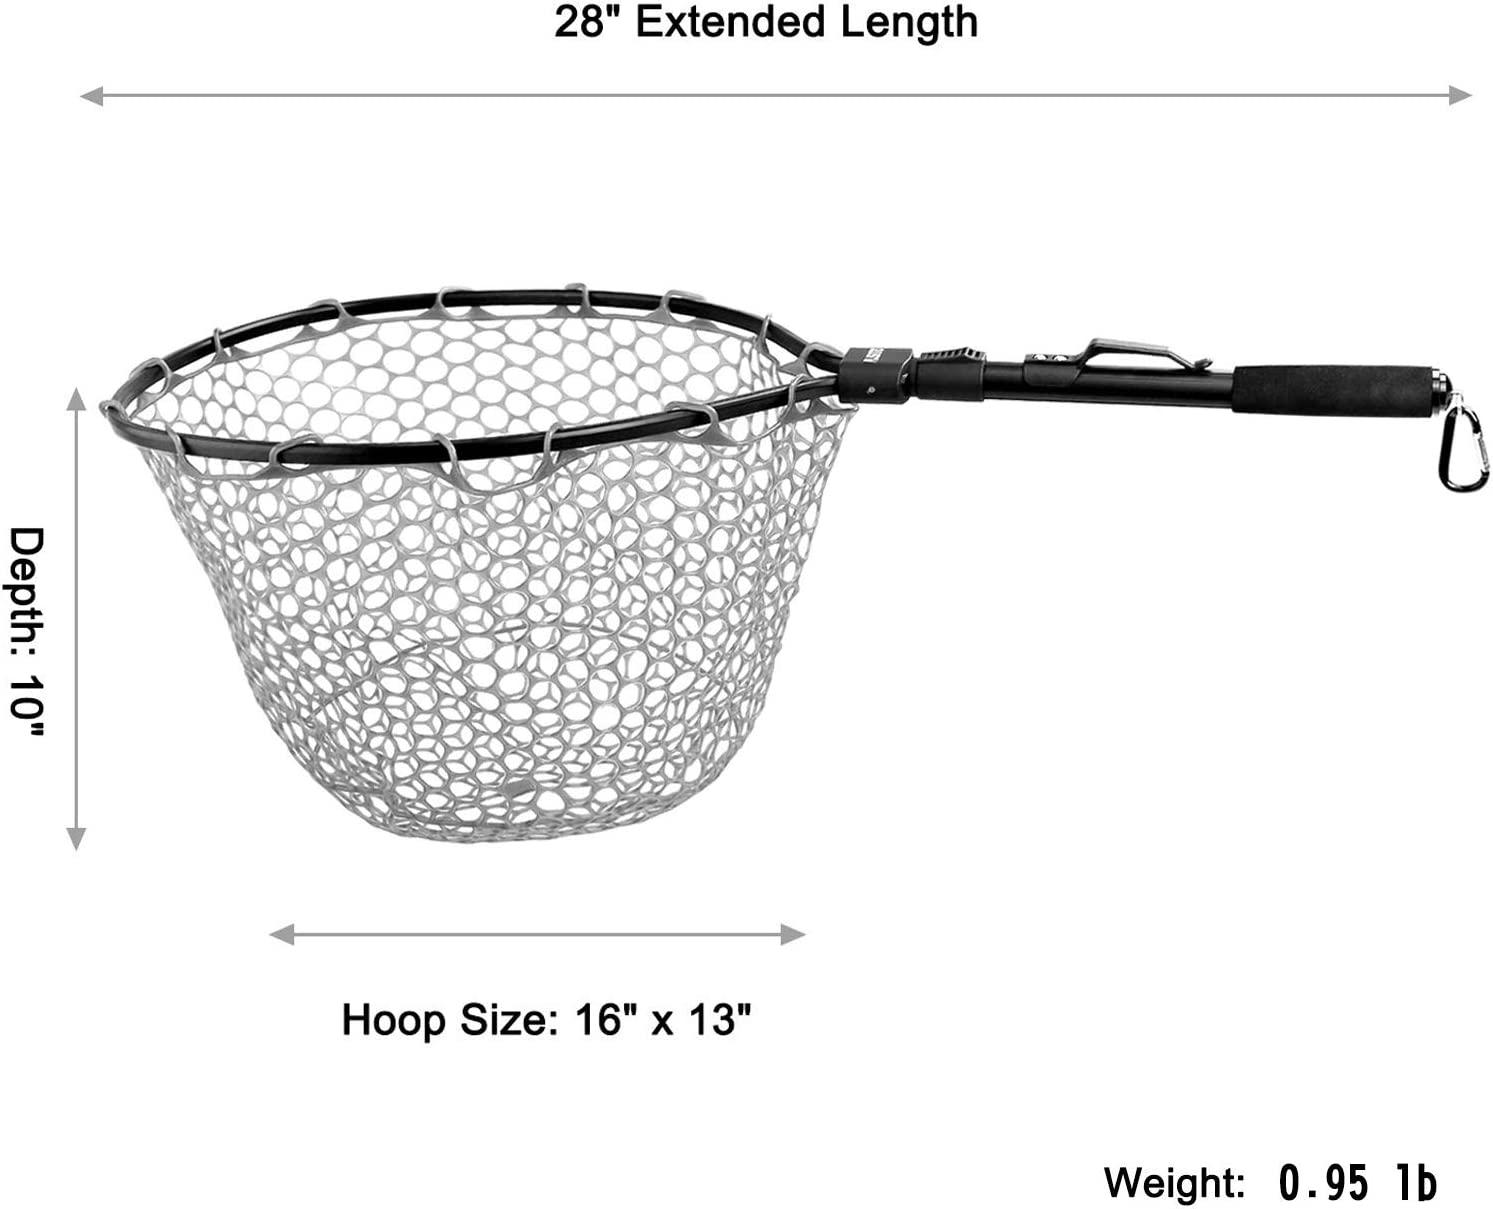 PLUSINNO Fly Fishing Net Fish Landing Net, Trout Bass Net Soft Rubber Mesh  Catch and Release Net 16 x 13 Hoop Size (28Extend Length)